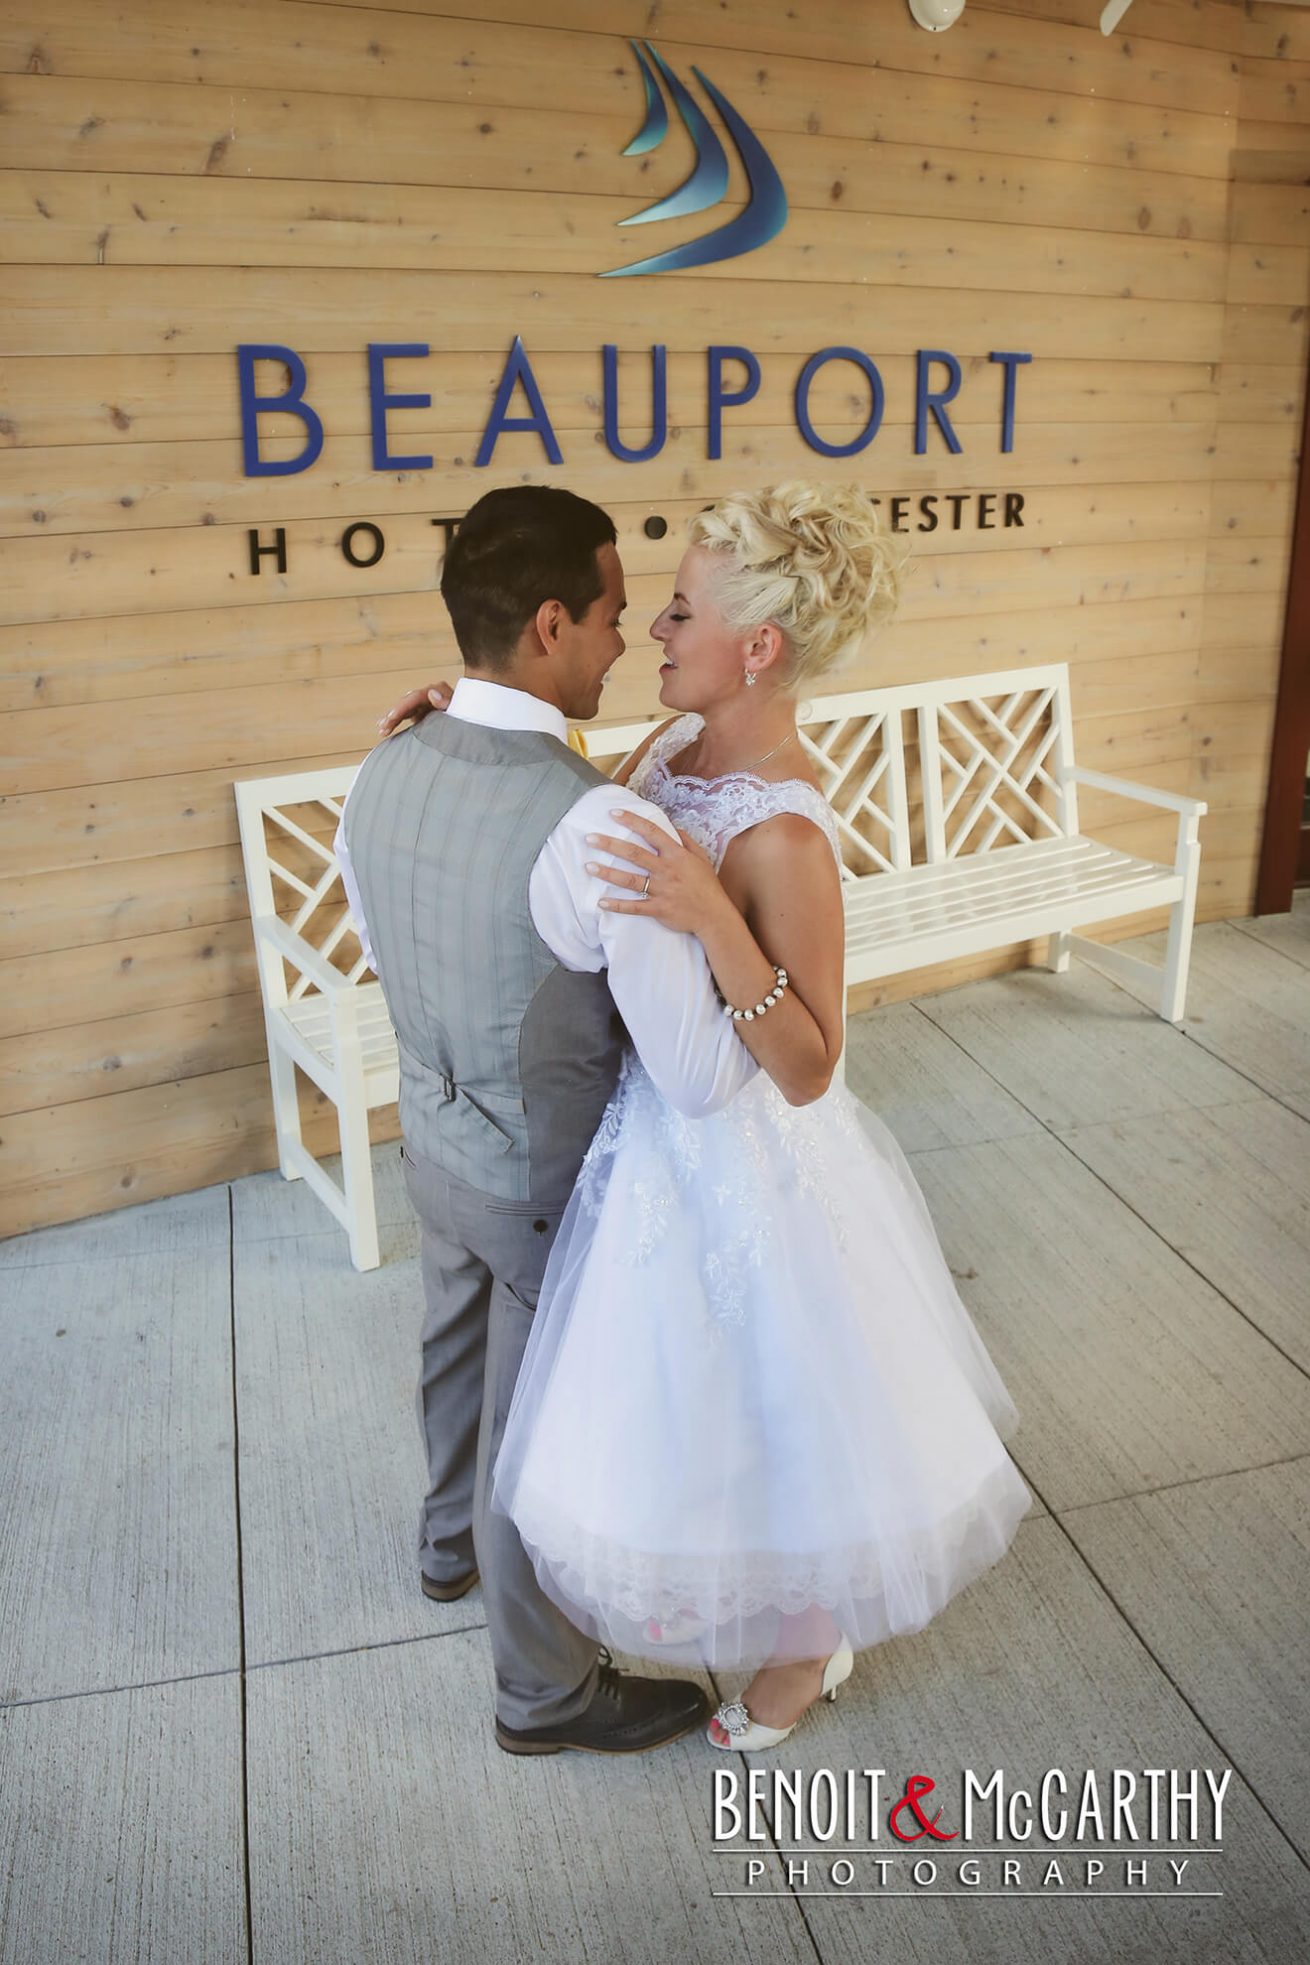 Beauport-Hotel-Beauport-Princess-Wedding-0015